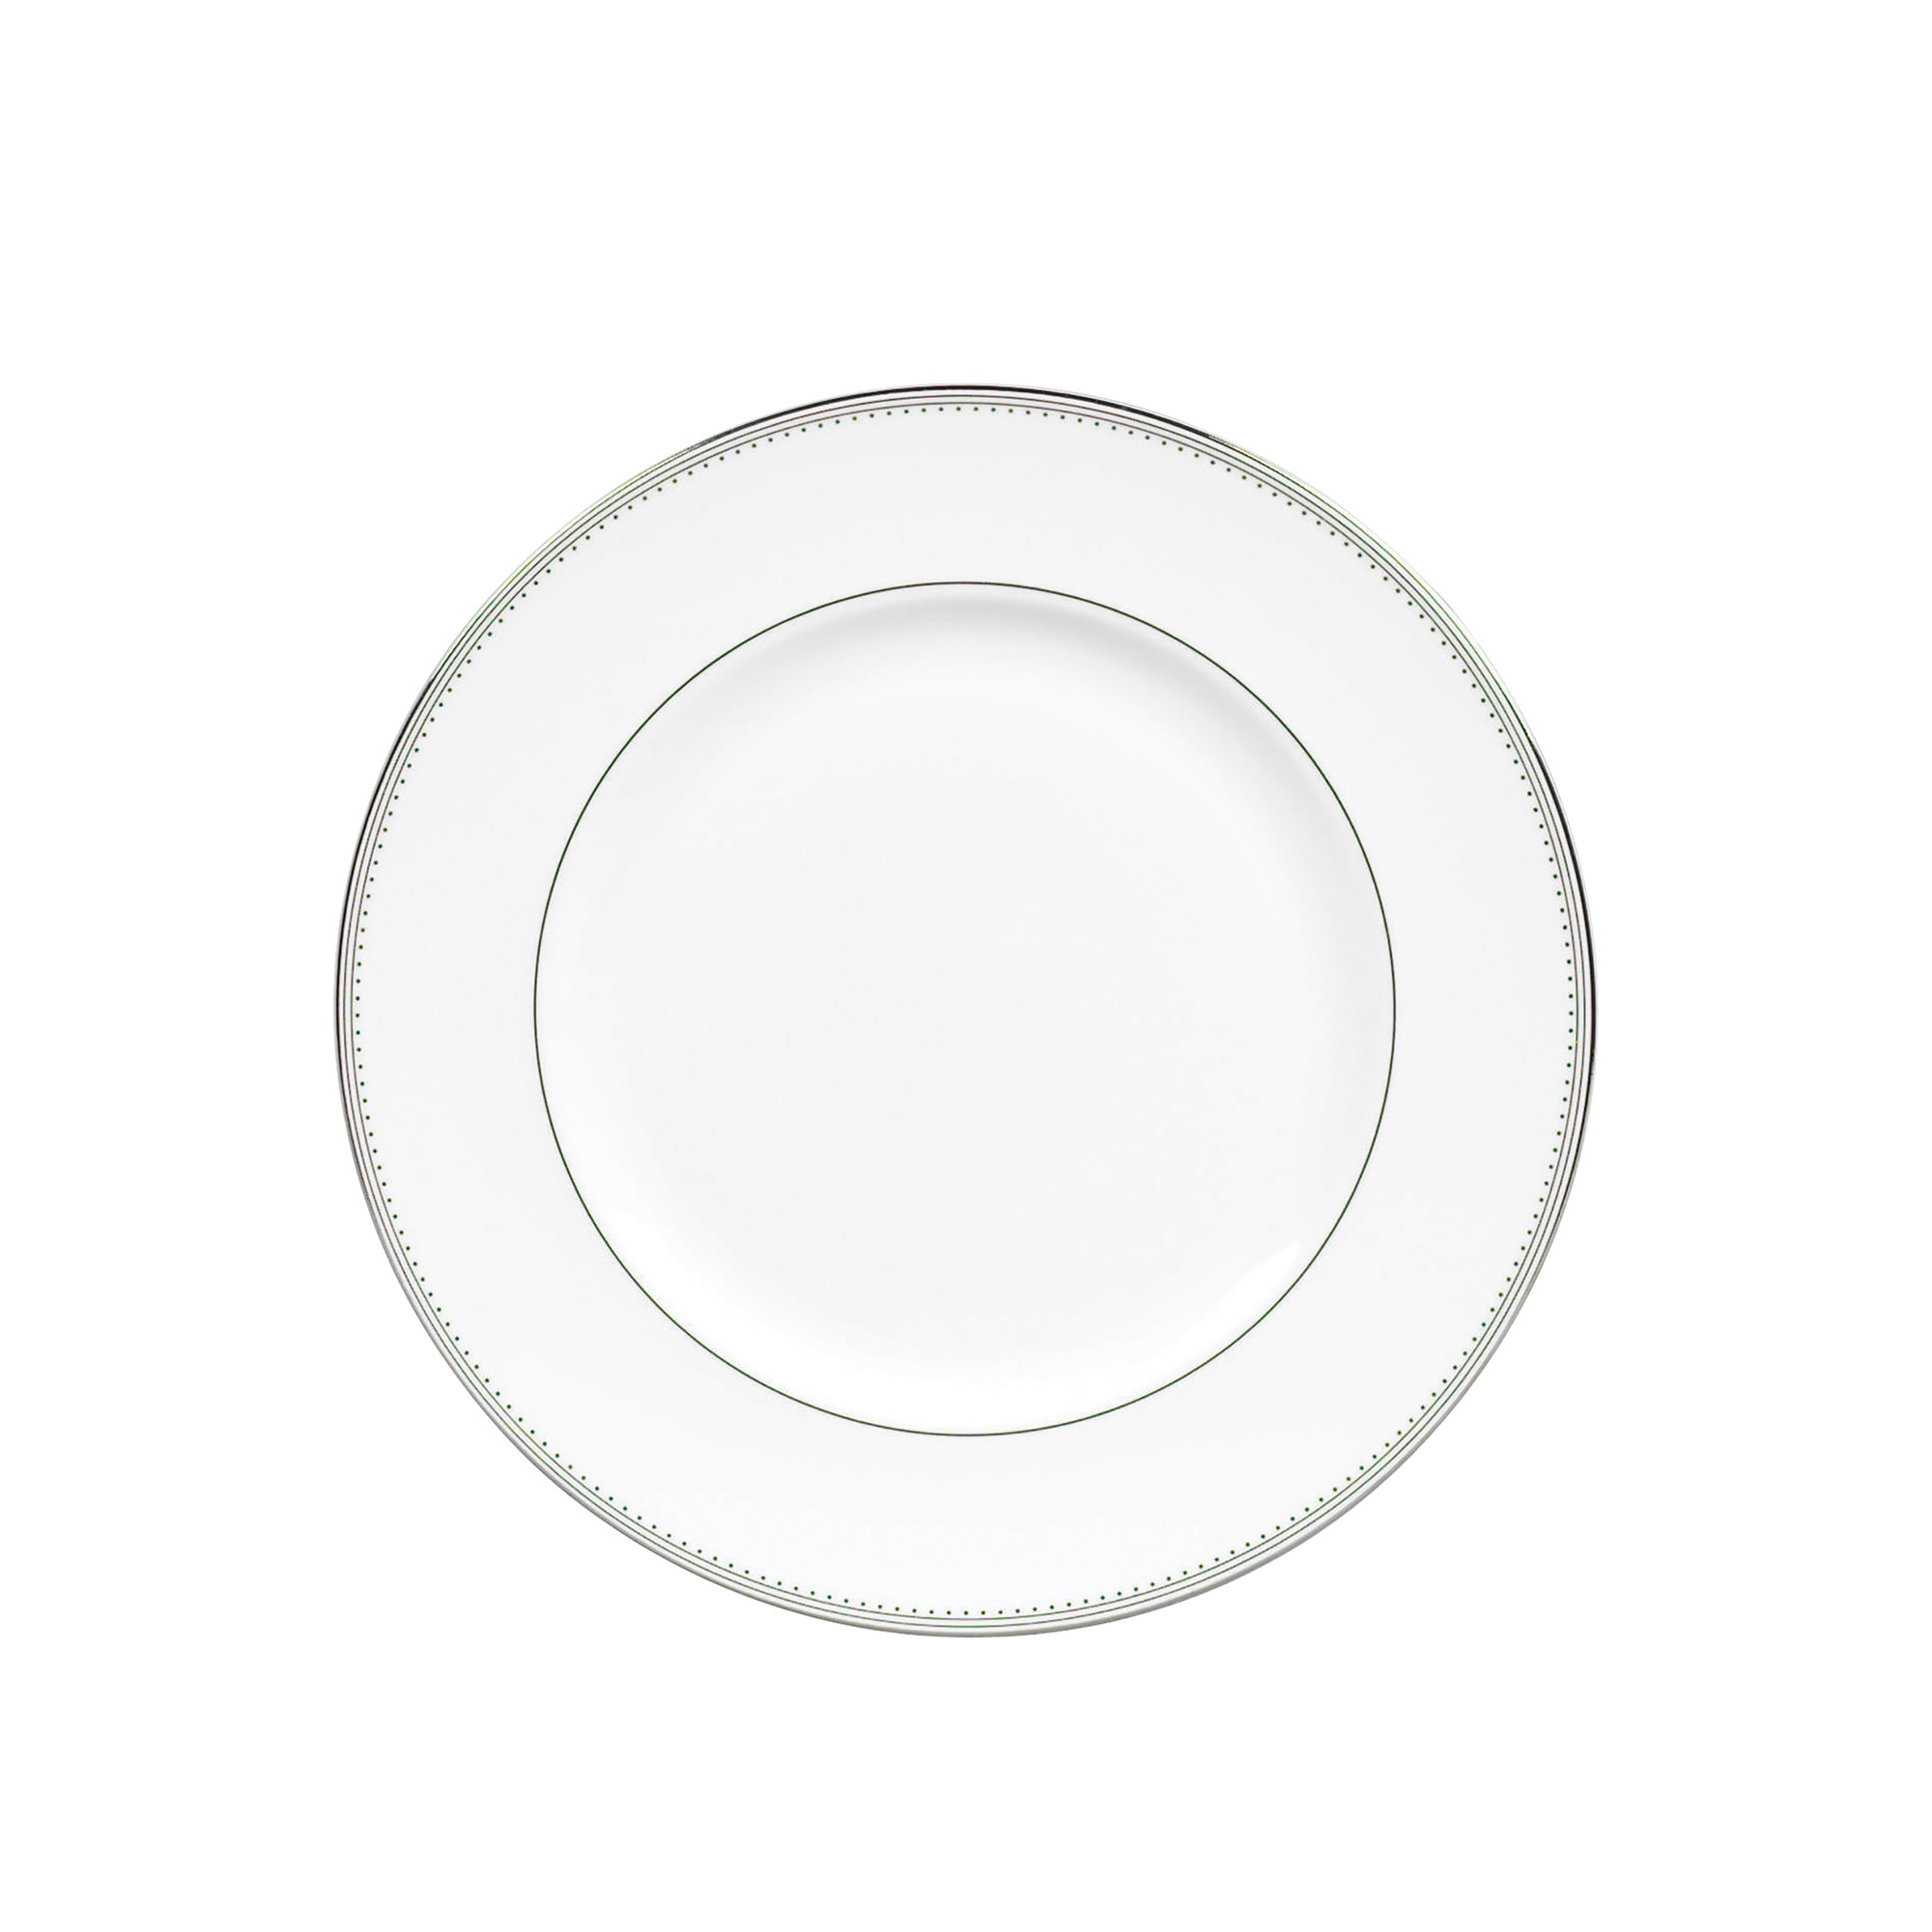 Köp Vera Wang Grosgrain Dinner Plate från Wedgwood